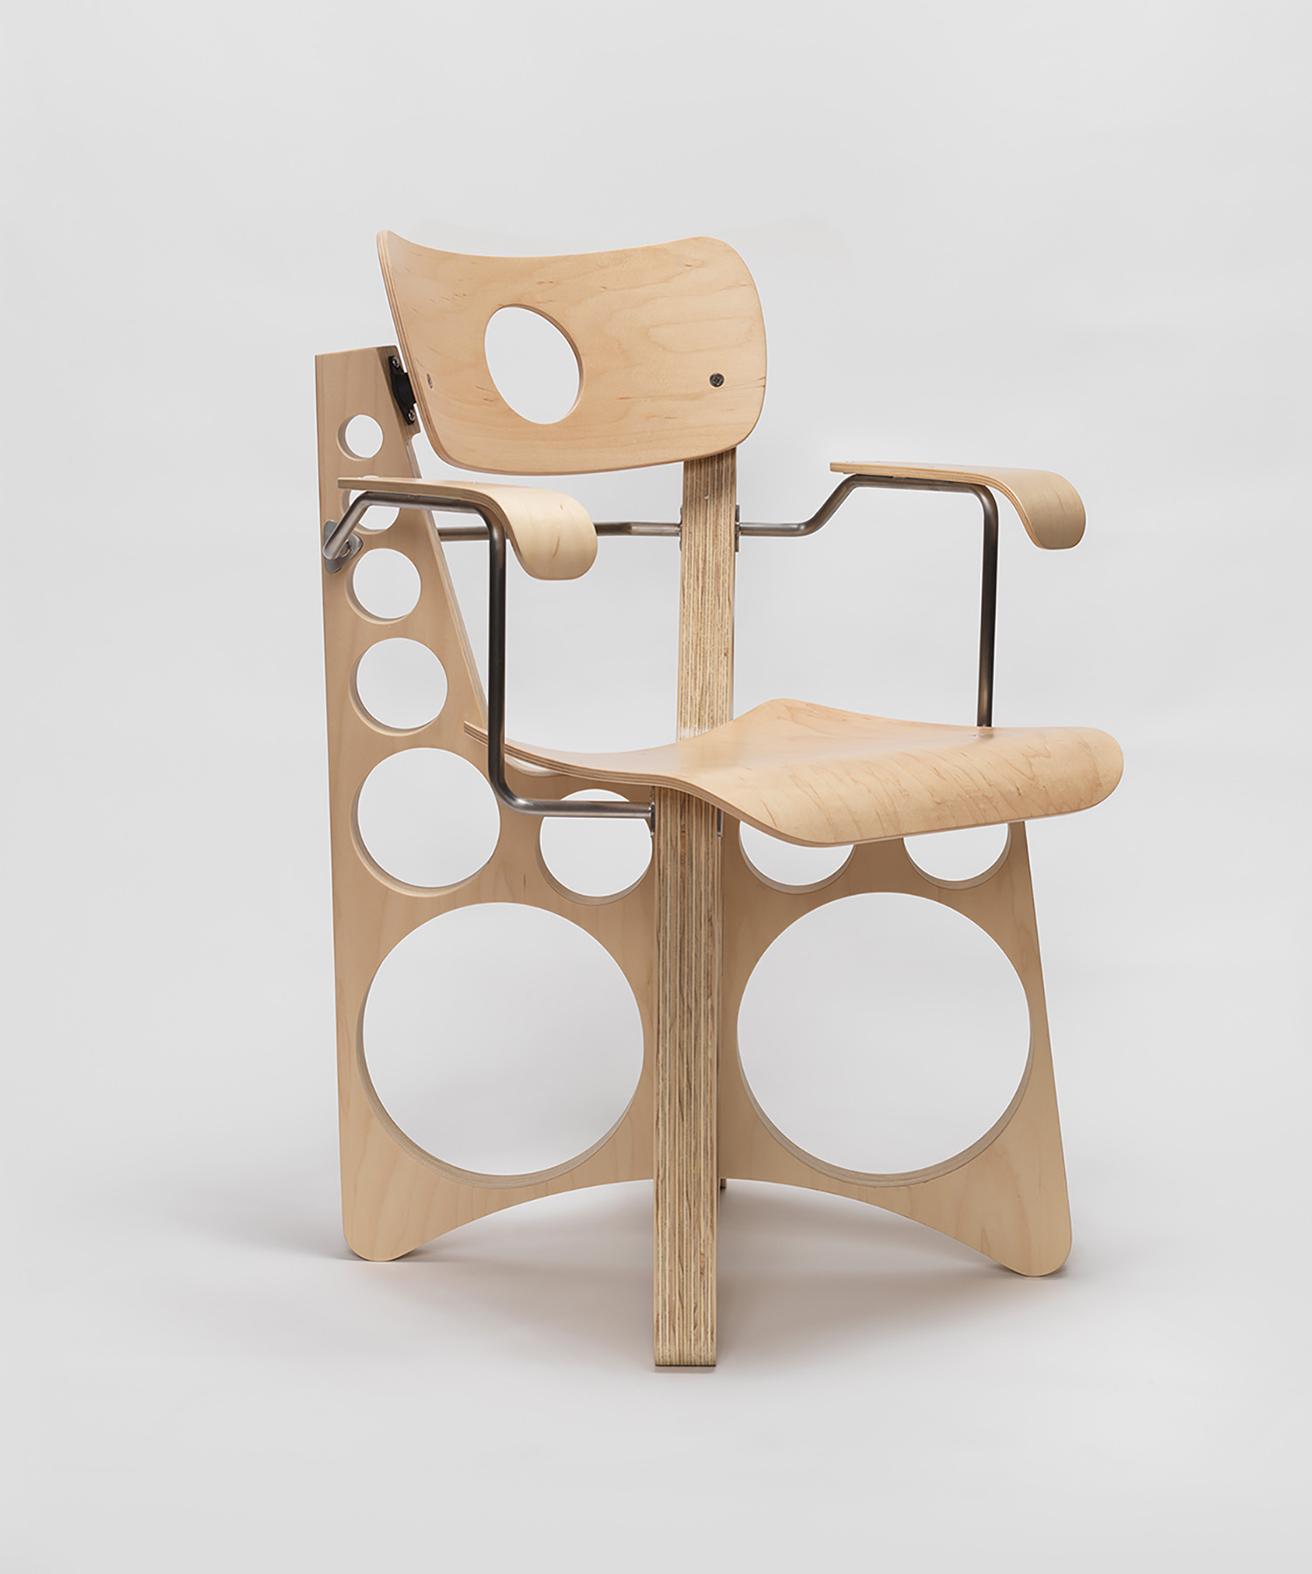 《Shop Chair》のバリエーション。メタルアーム付きの《Arm Rest Shop Chair》。w60.9 ×d46.9×h85cmv ©️Tom Sachs